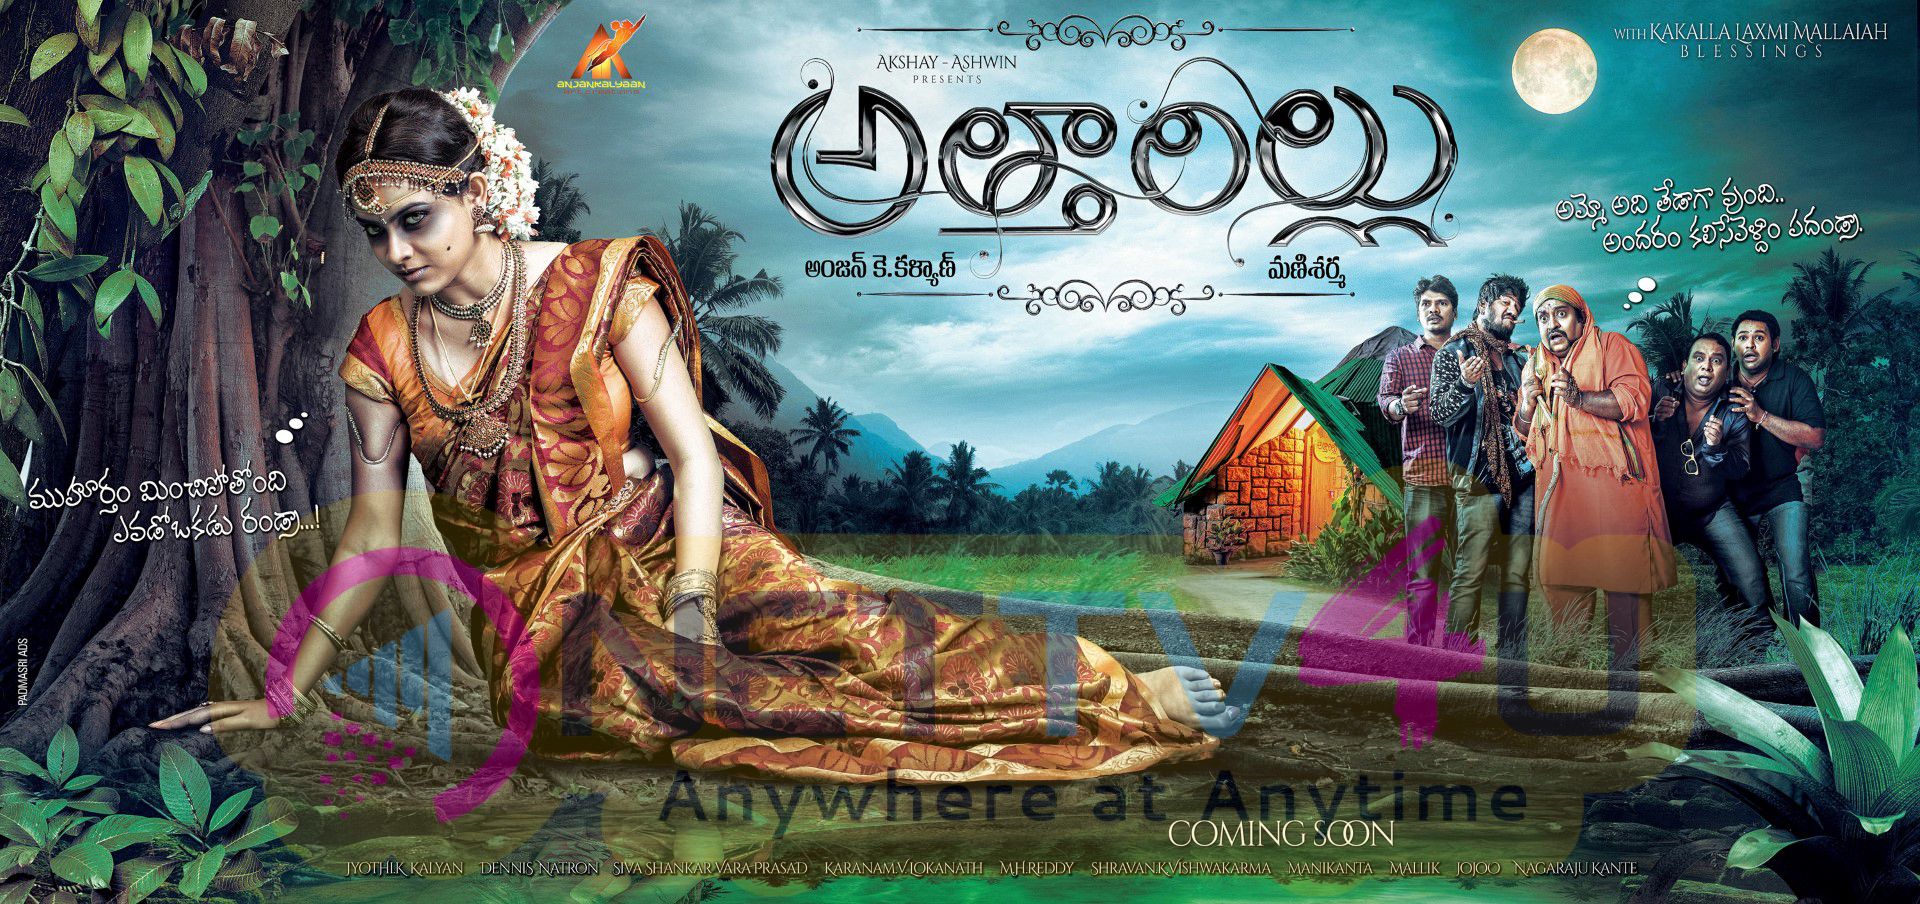 Telugu Movie Attarillu First Look Poster Telugu Gallery